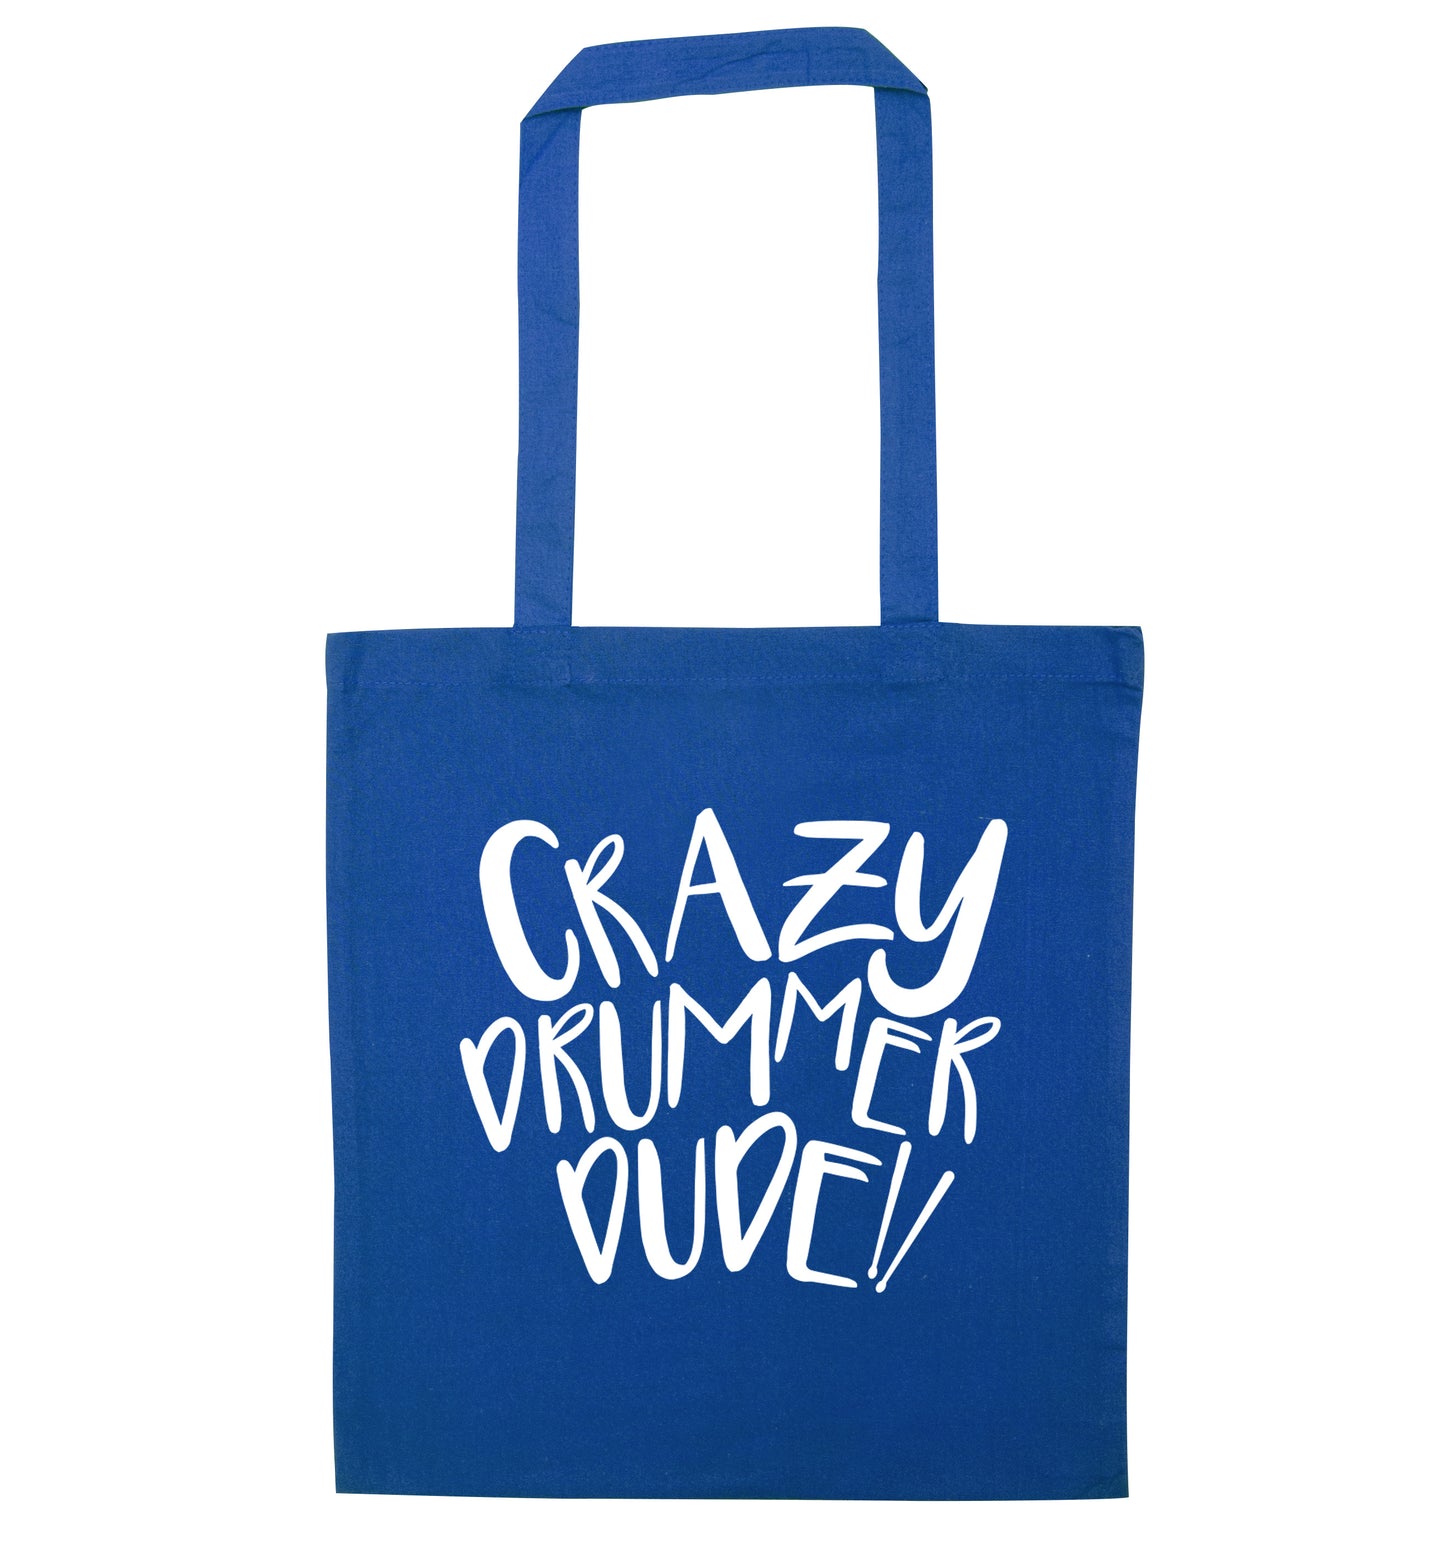 Crazy drummer dude blue tote bag